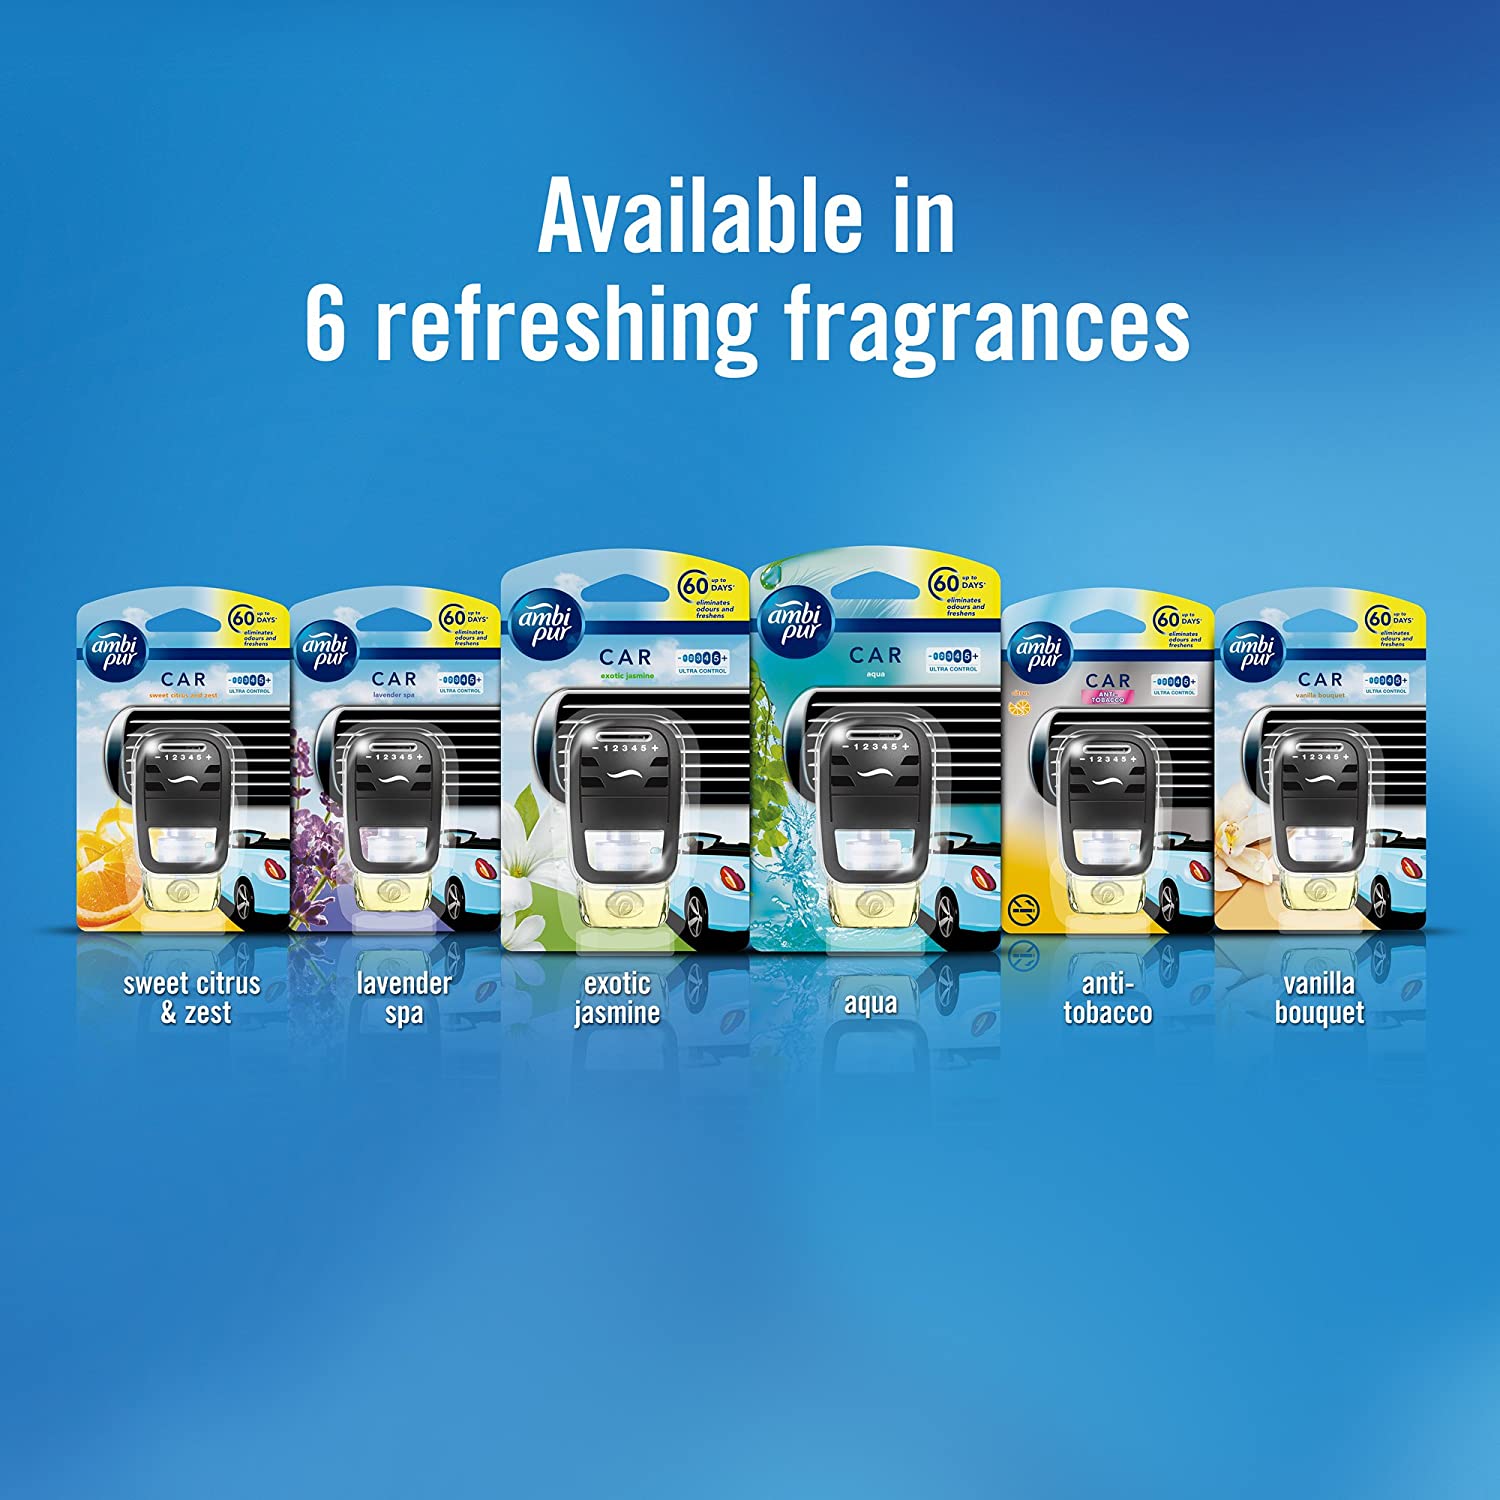 Buy Ambi pur Car Air Freshener - Starter Kit + 2 Aqua Refill 2 x 7 ml  Online at Best Price. of Rs null - bigbasket